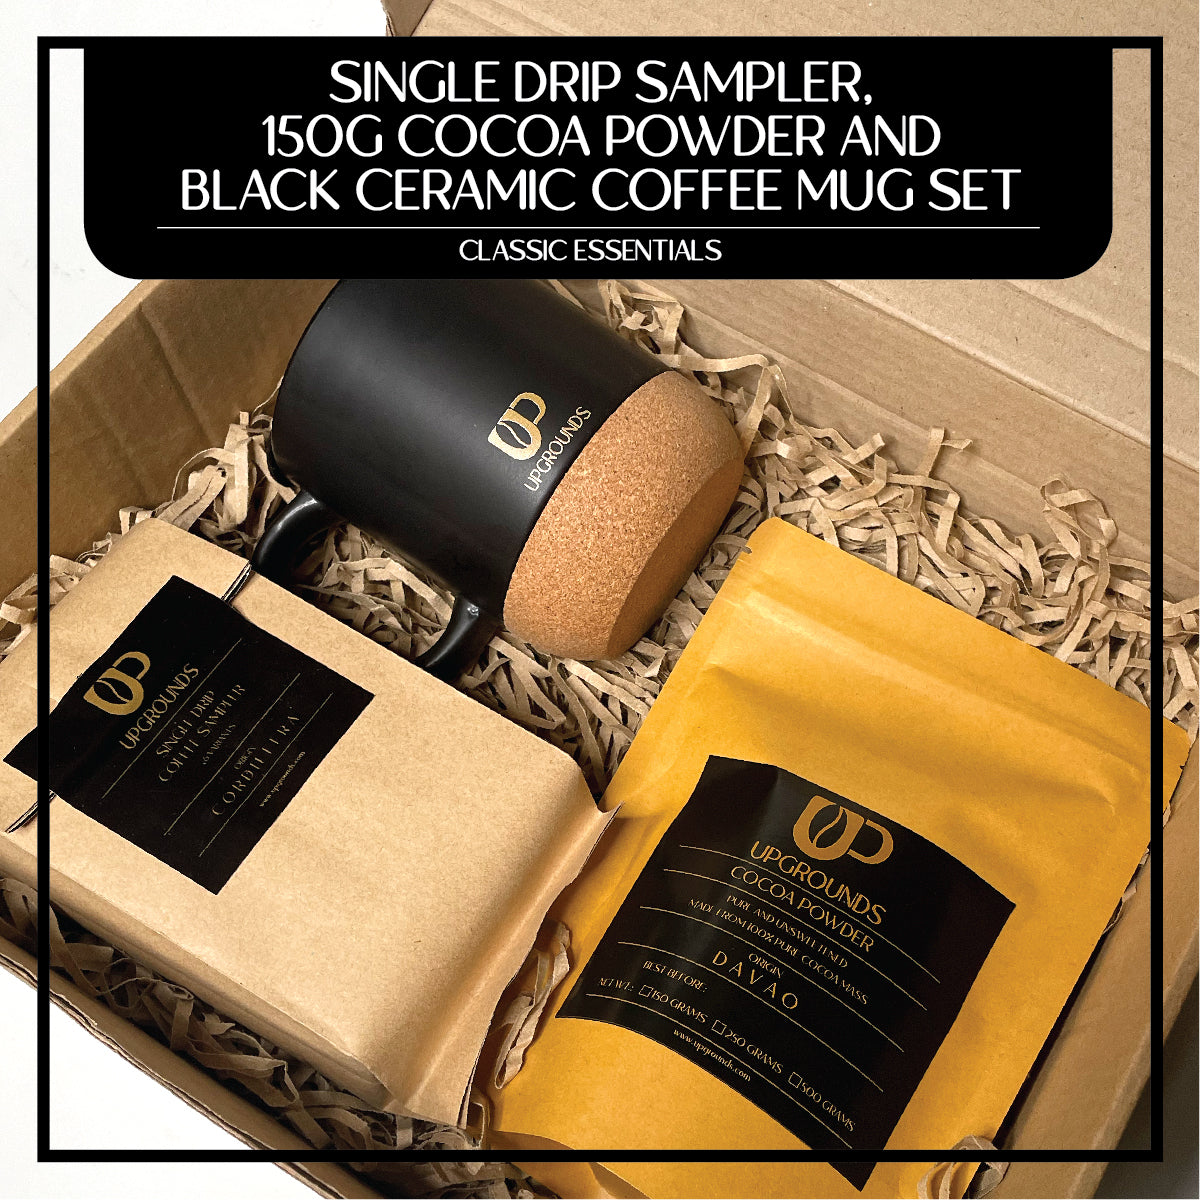 Single Drip Sampler, 150g Cocoa Powder and 360ml Black Ceramic Mug Set | Upgrounds